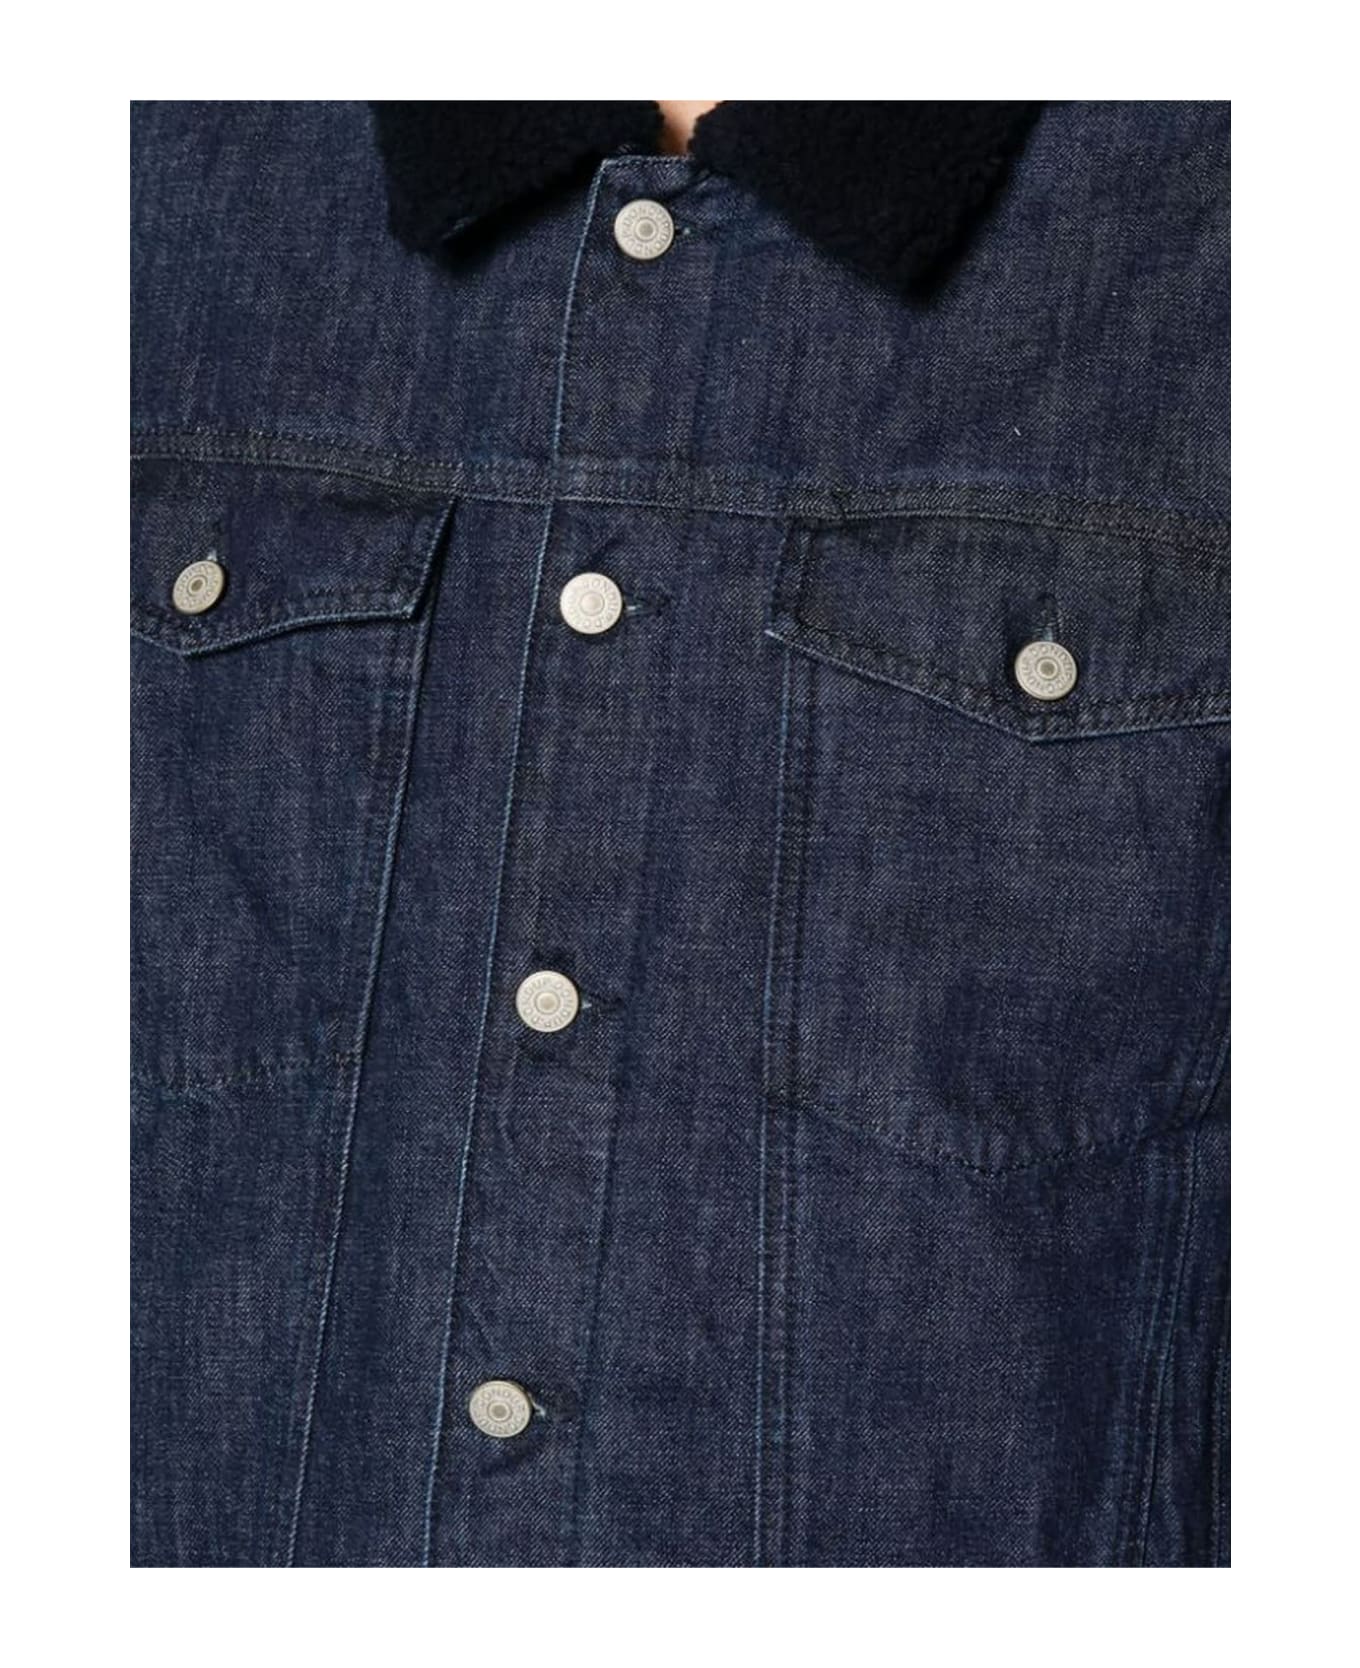 Dondup Blue Cotton Denim Jacket - Blue ジャケット